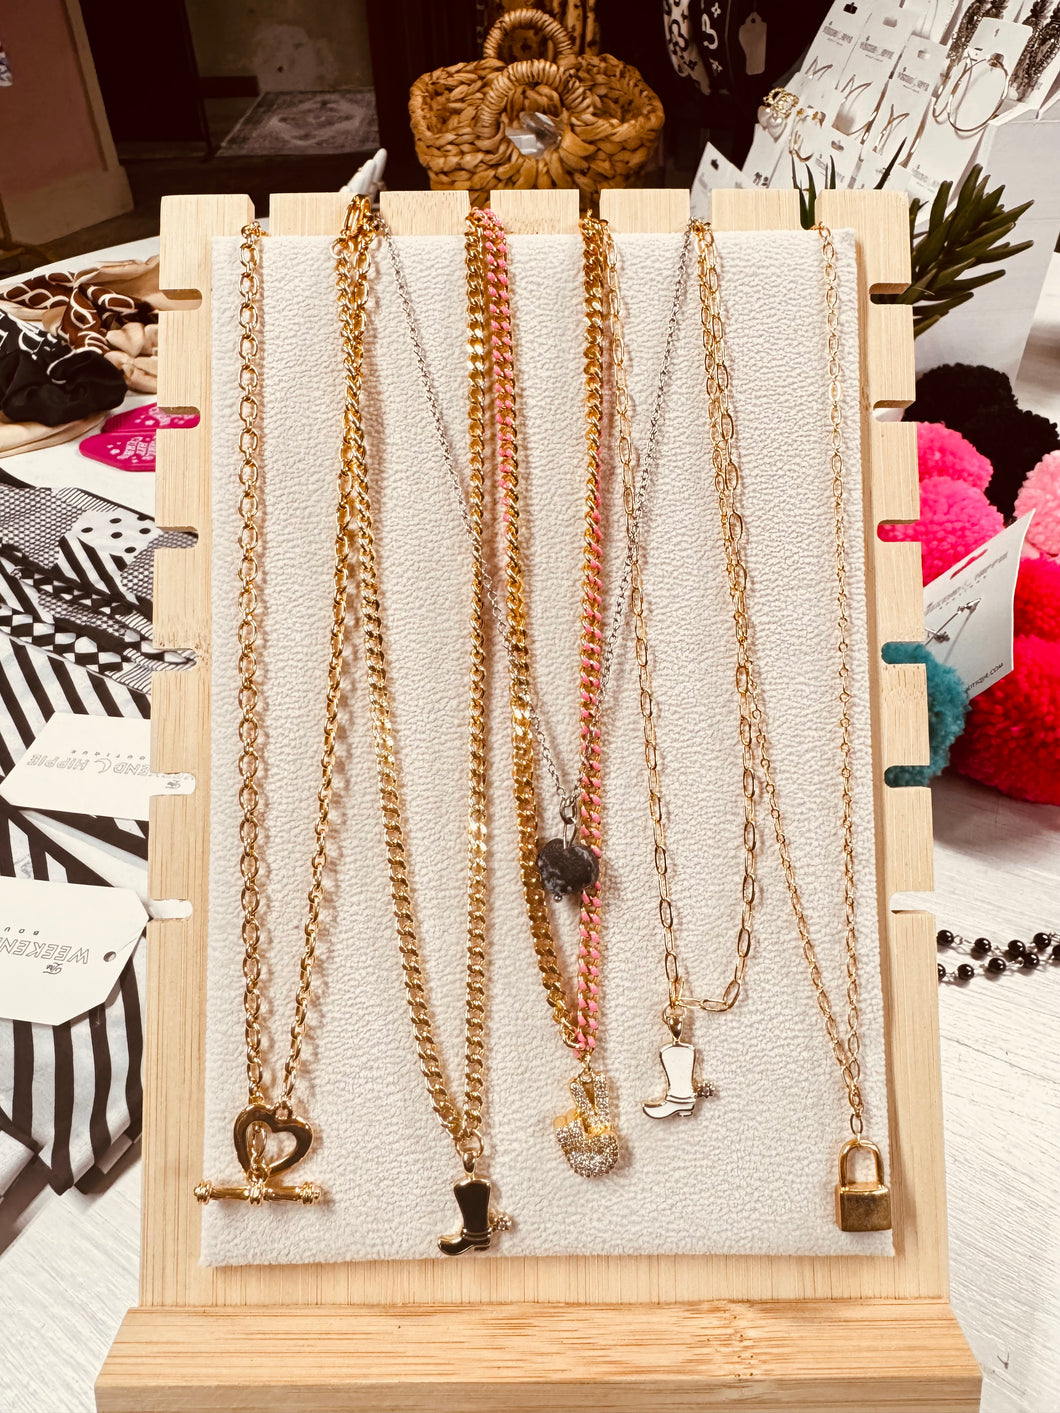 Gold simplicity necklaces